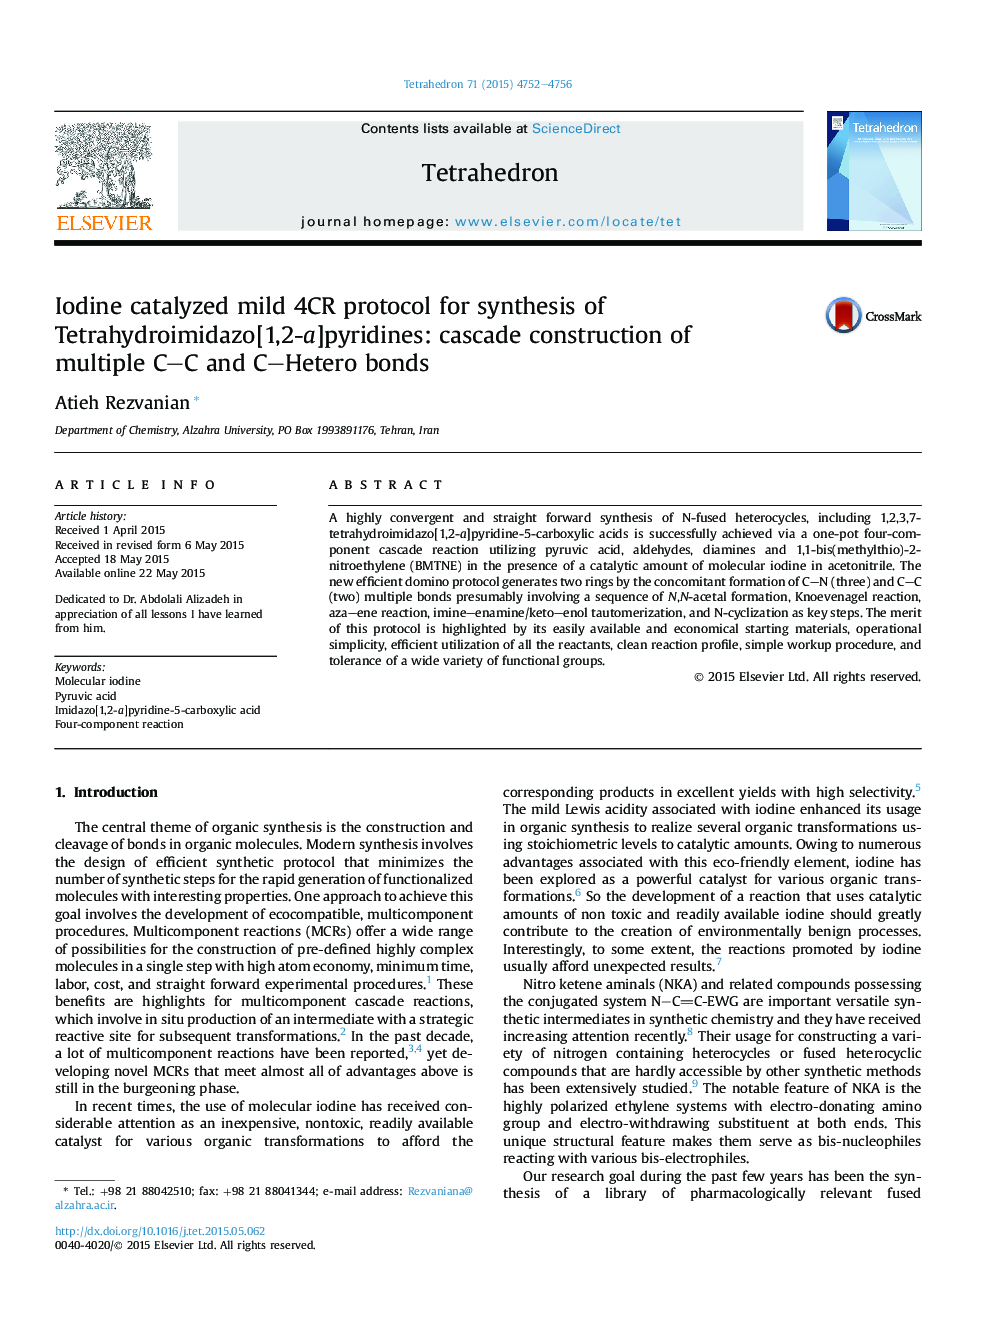 Iodine catalyzed mild 4CR protocol for synthesis of Tetrahydroimidazo[1,2-a]pyridines: cascade construction of multiple C-C and C-Hetero bonds